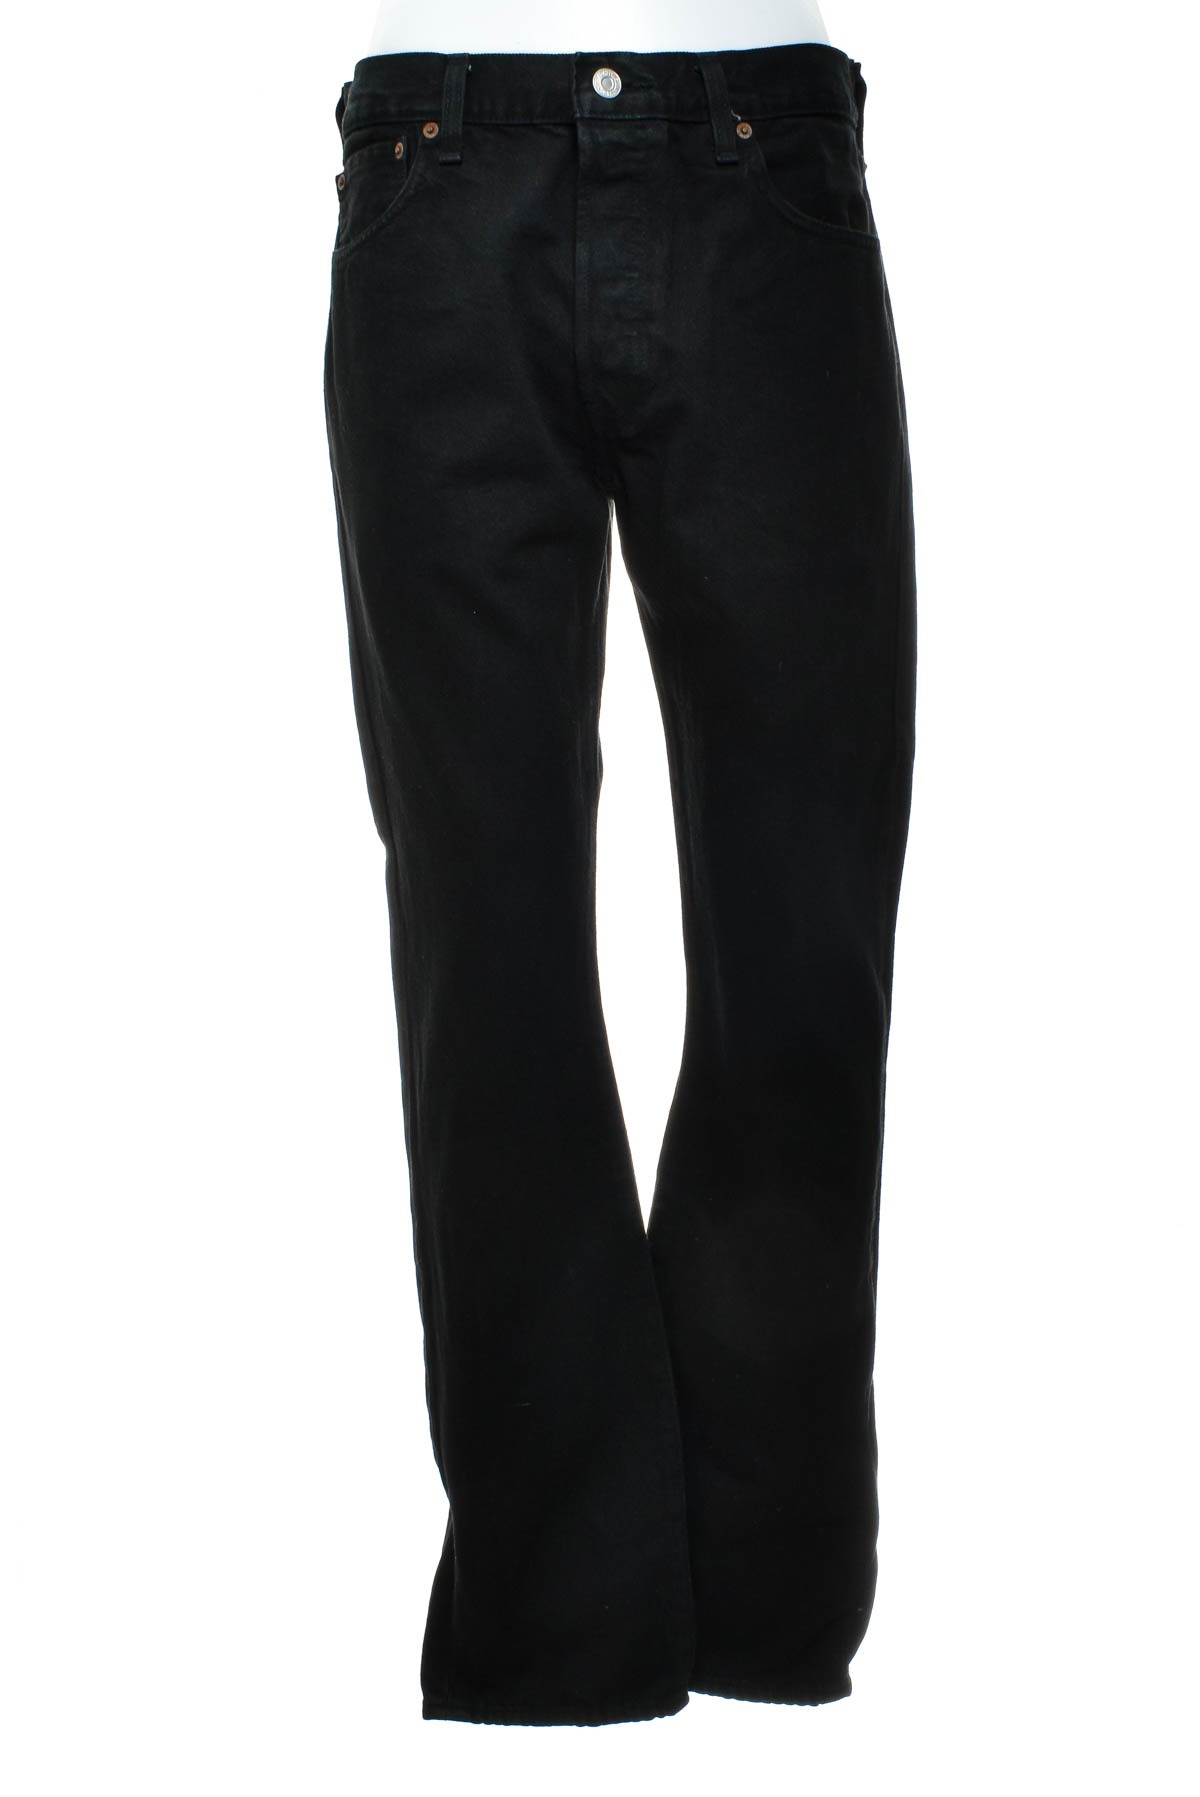 Jeans pentru bărbăți - Levi Strauss & Co - 0